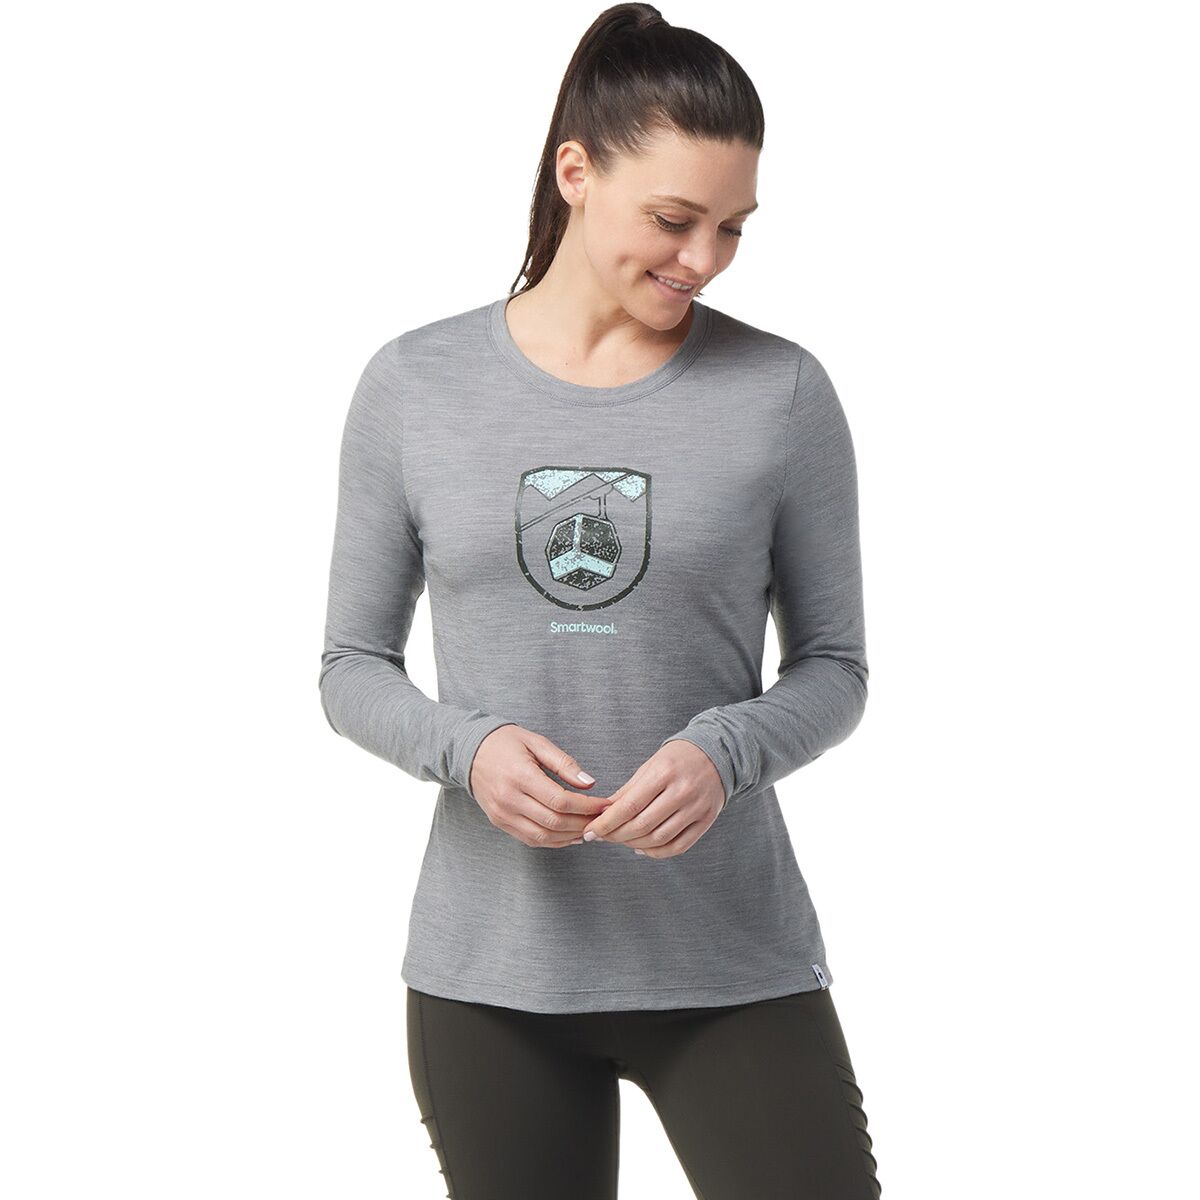 Smartwool Gondola Ride Long-Sleeve Graphic T-Shirt - Women's